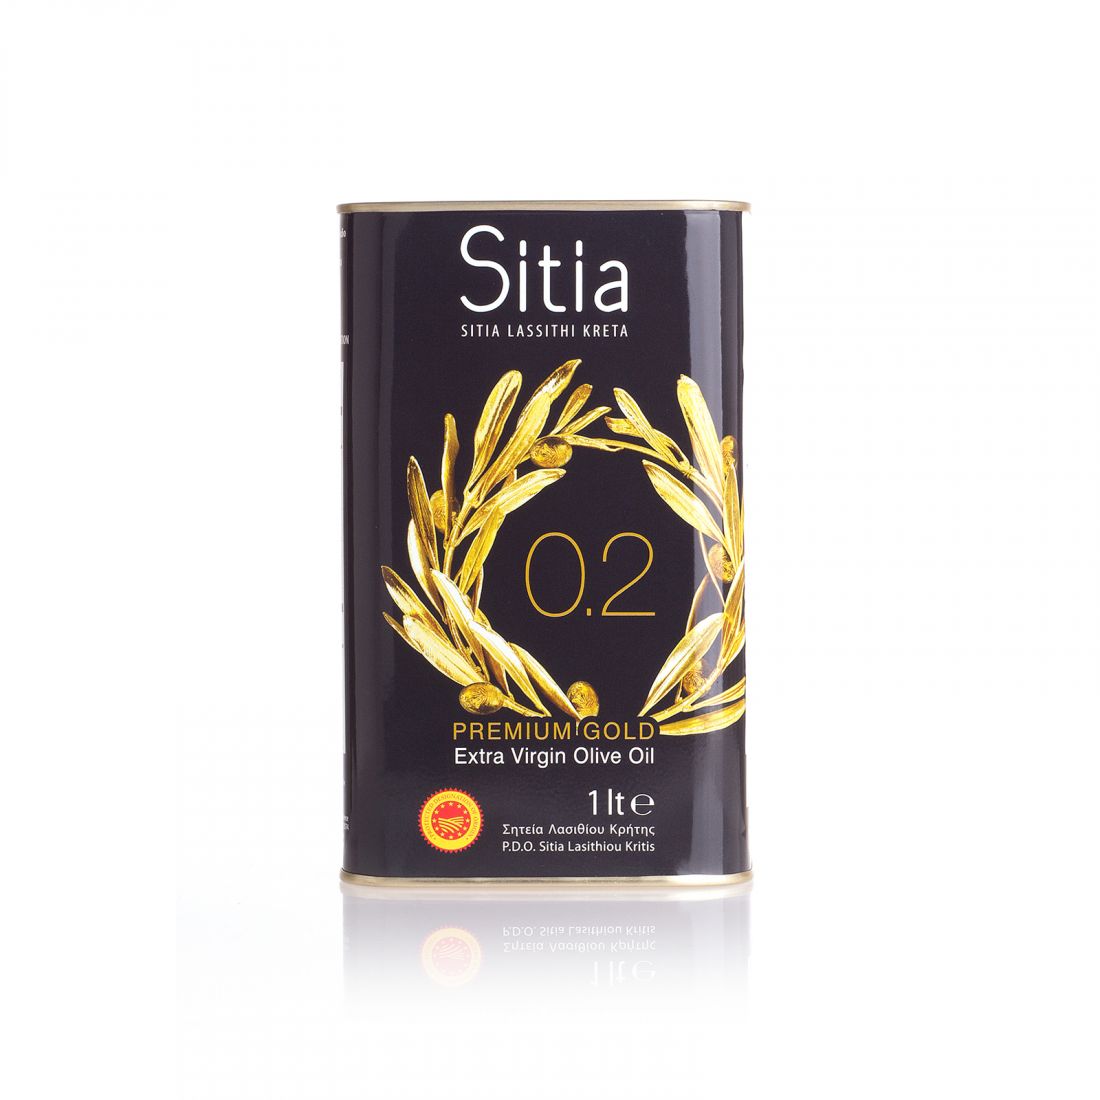 Оливковое масло SITIA Premium Gold - 1 л 0.2 экстра вирджин PDO